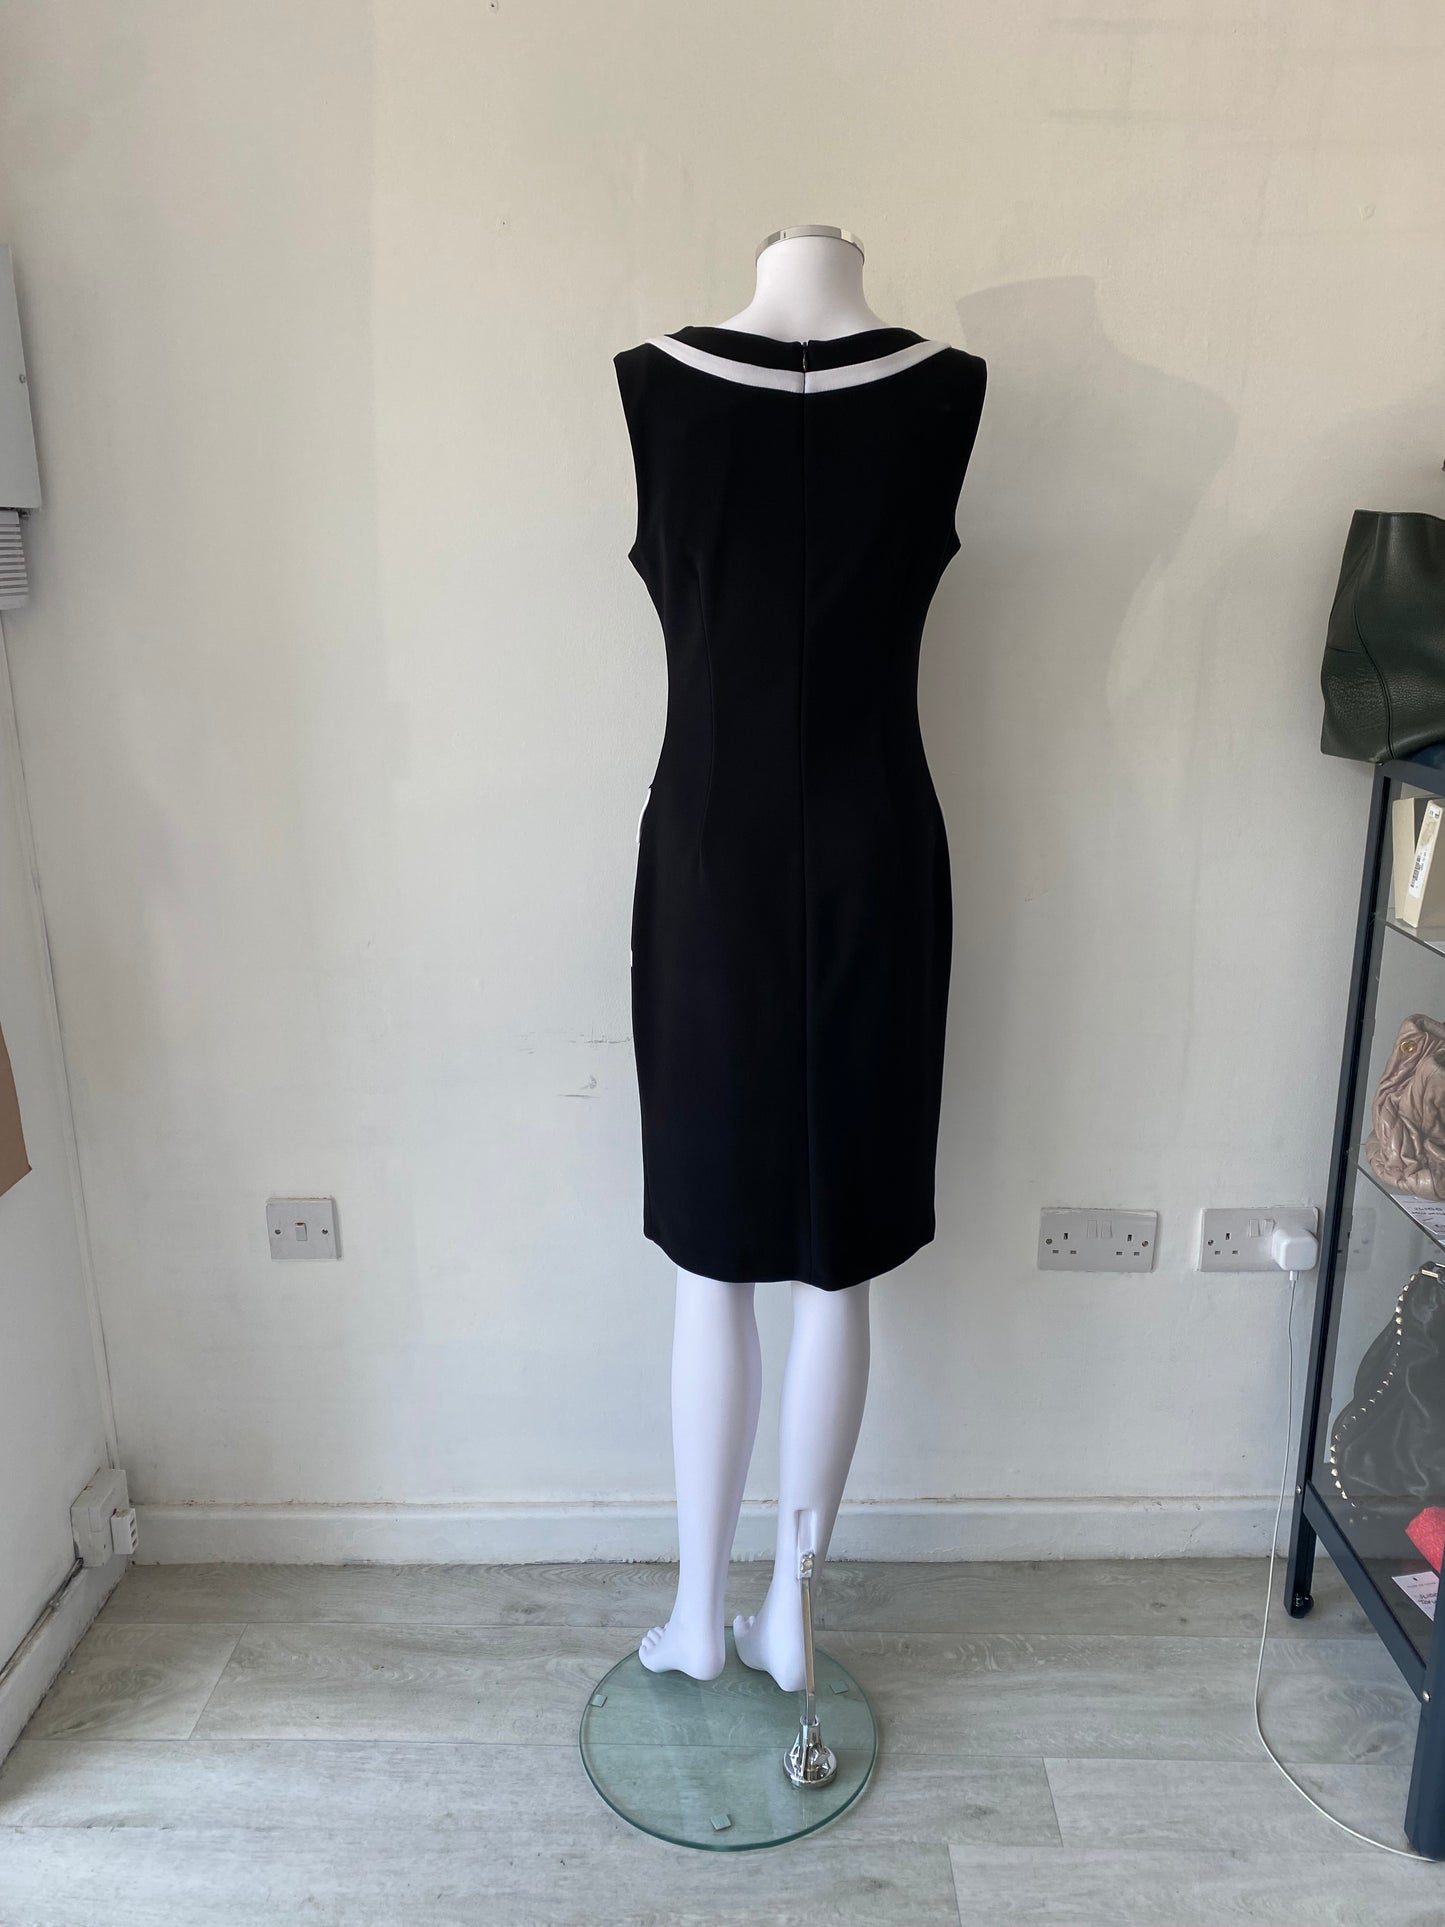 Joseph Ribkoff Black Dress Size 8-10